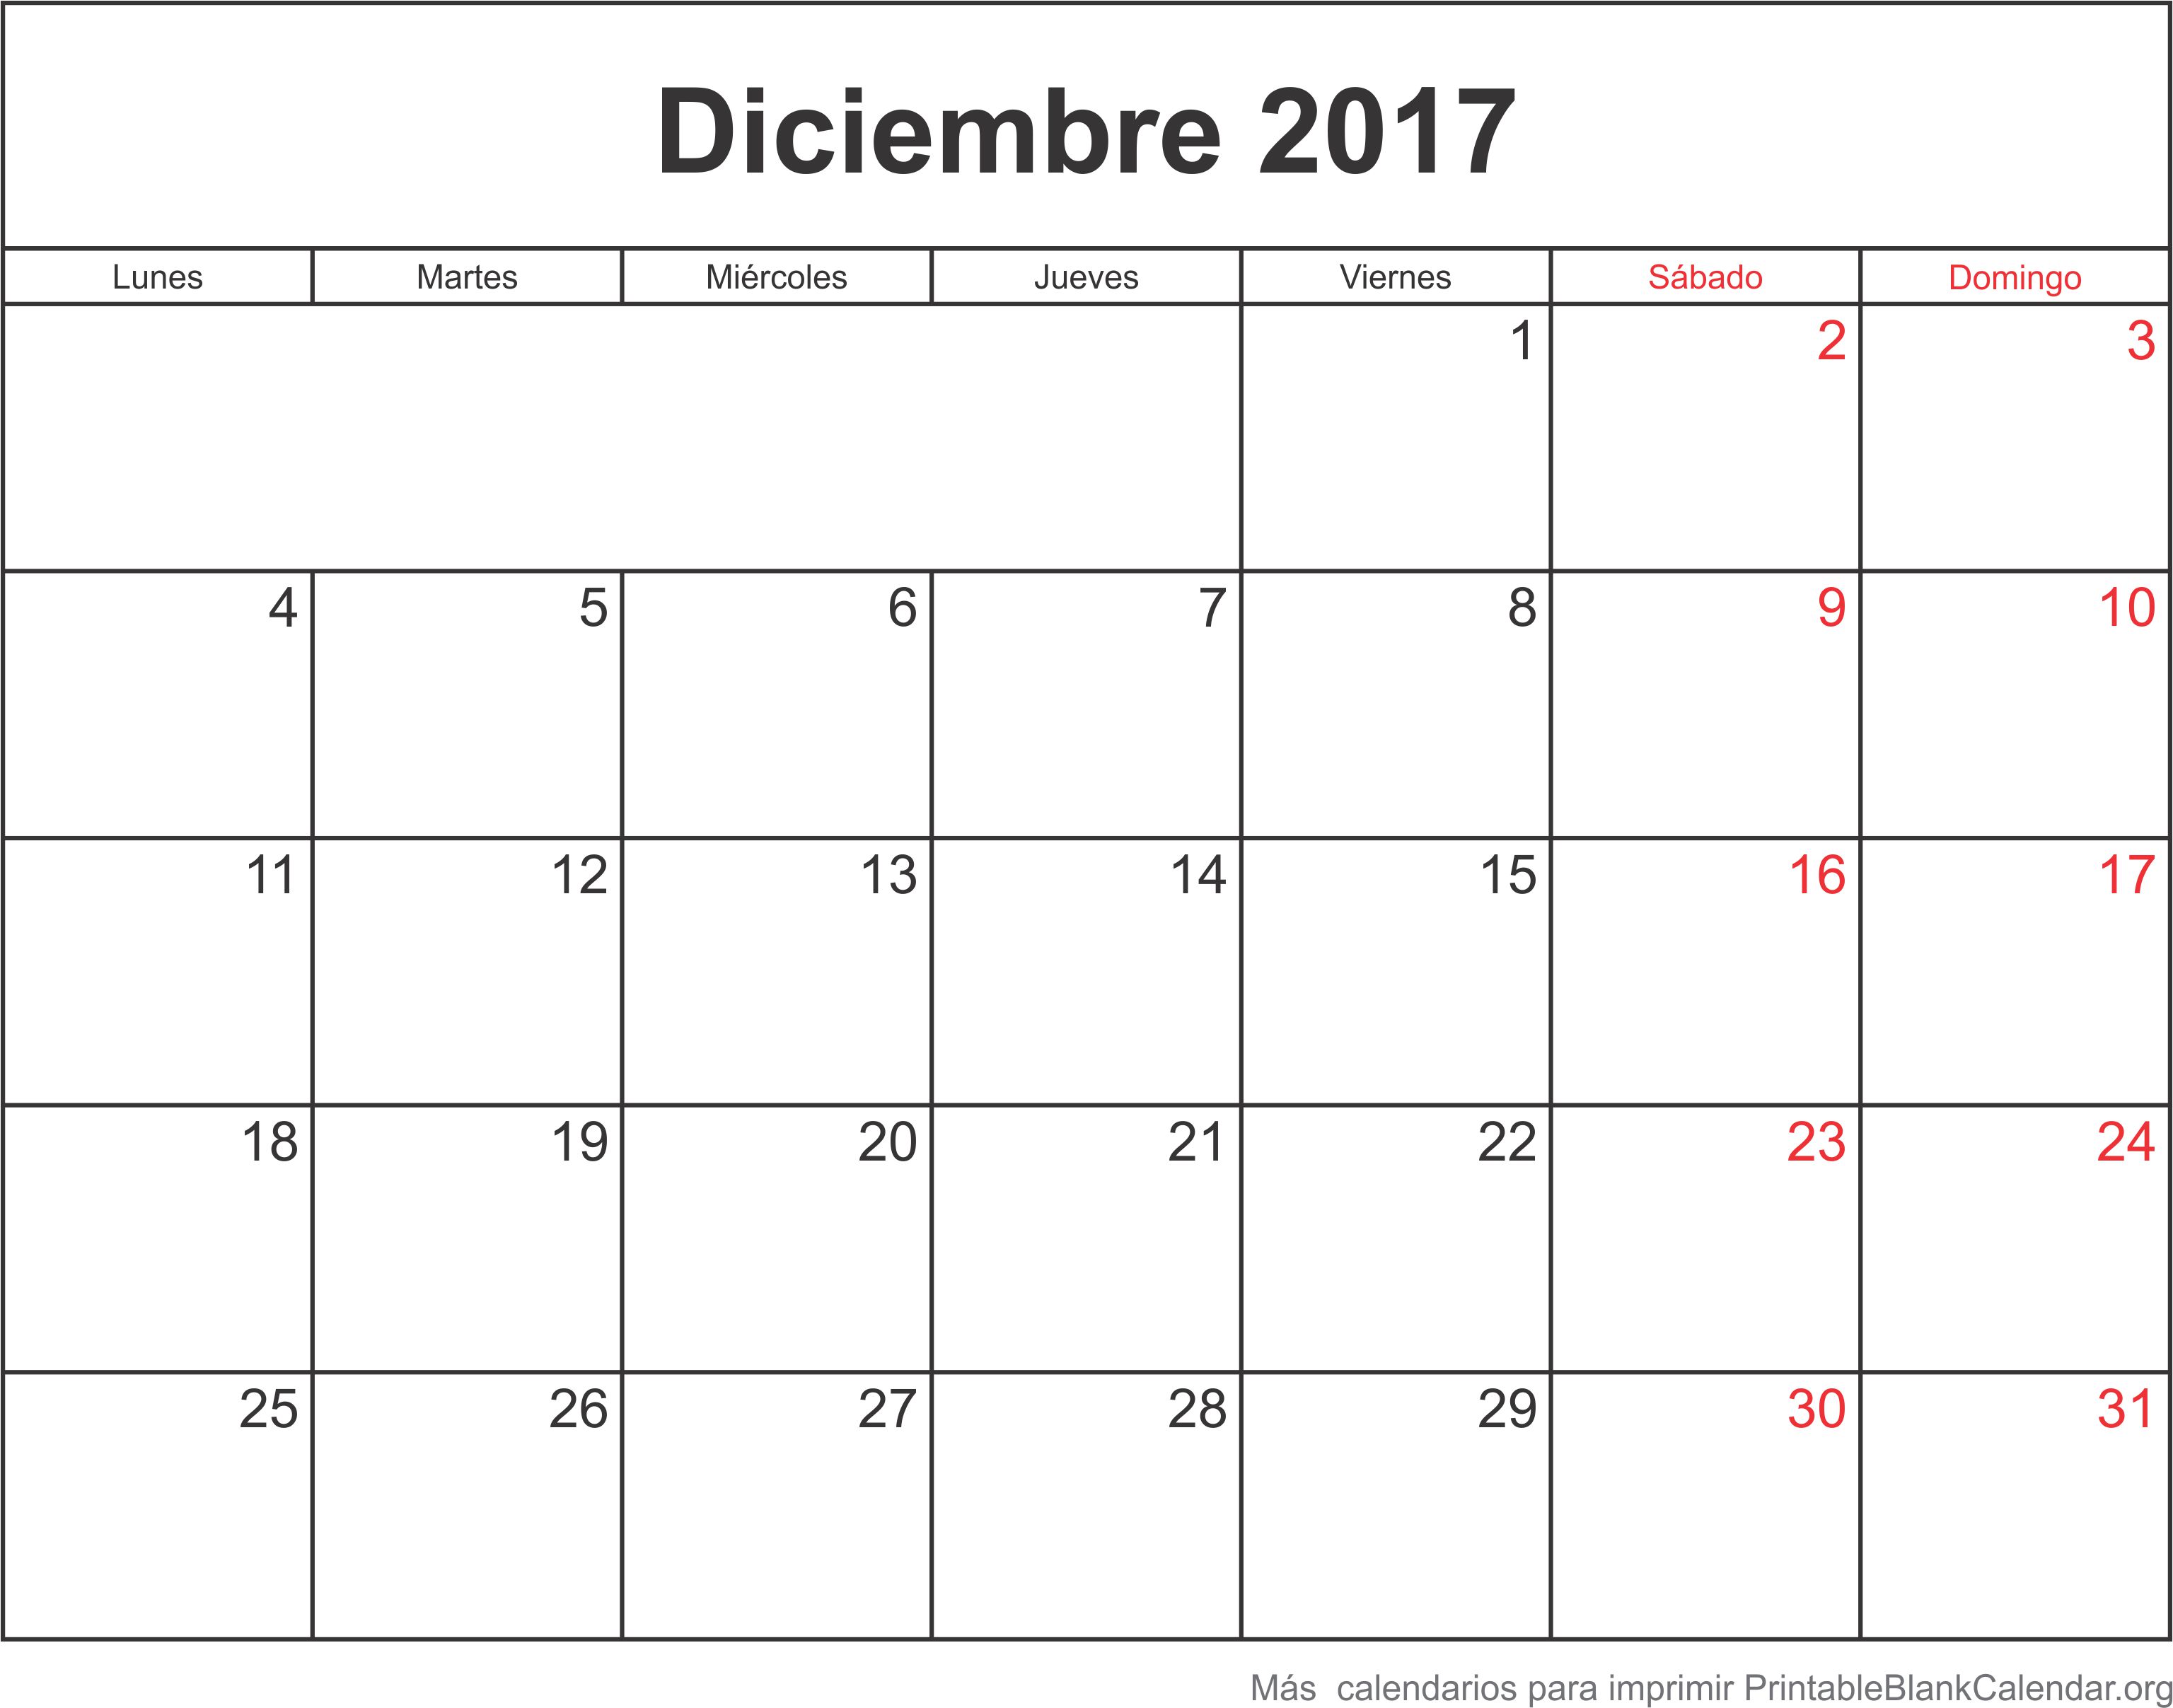 deciembre 2017 calendario